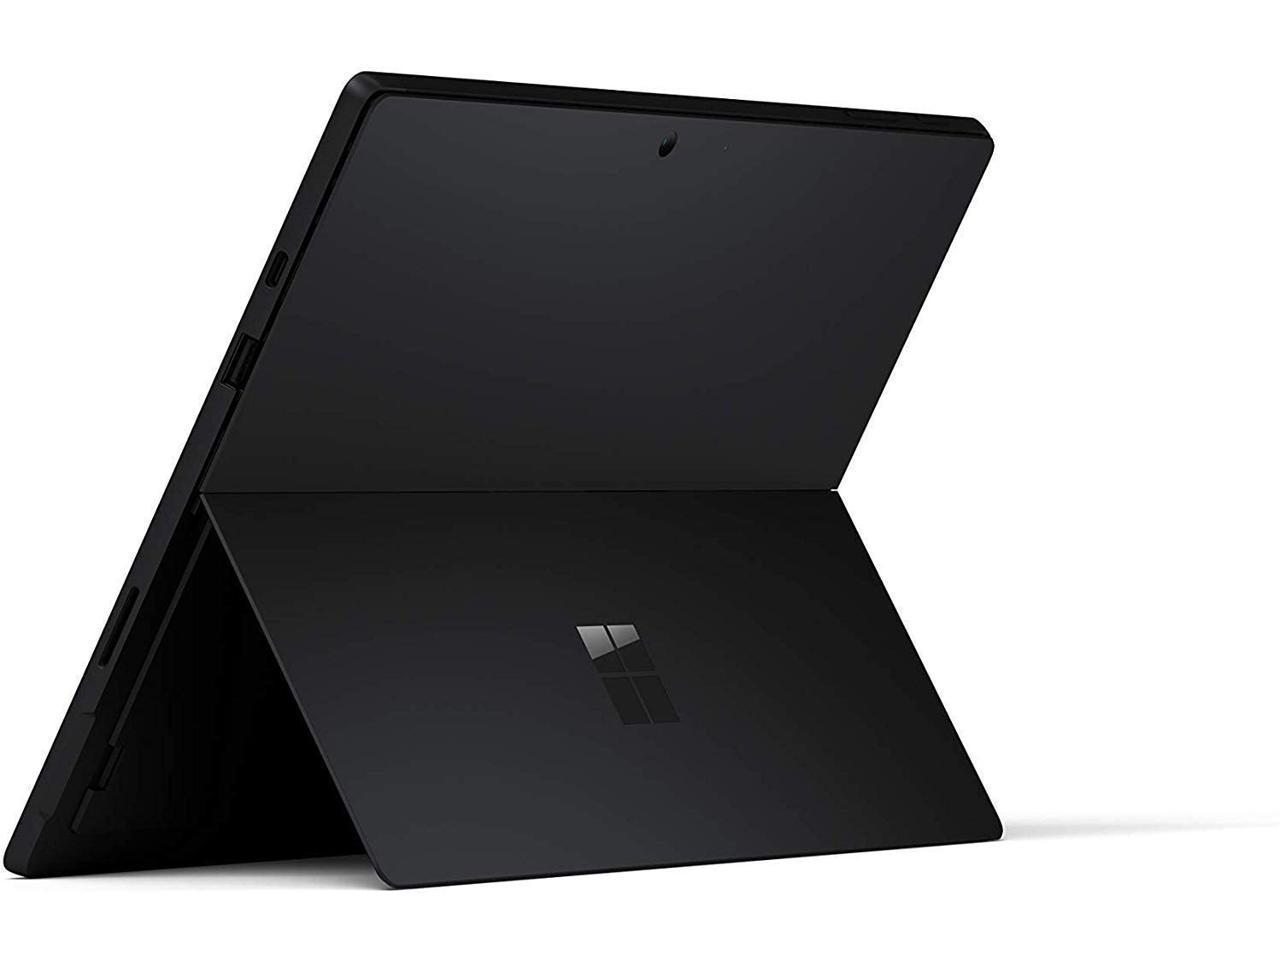 PC/タブレット タブレット Microsoft Surface Pro 7 (PVR-00016) Model 1866, Black - Newegg.com